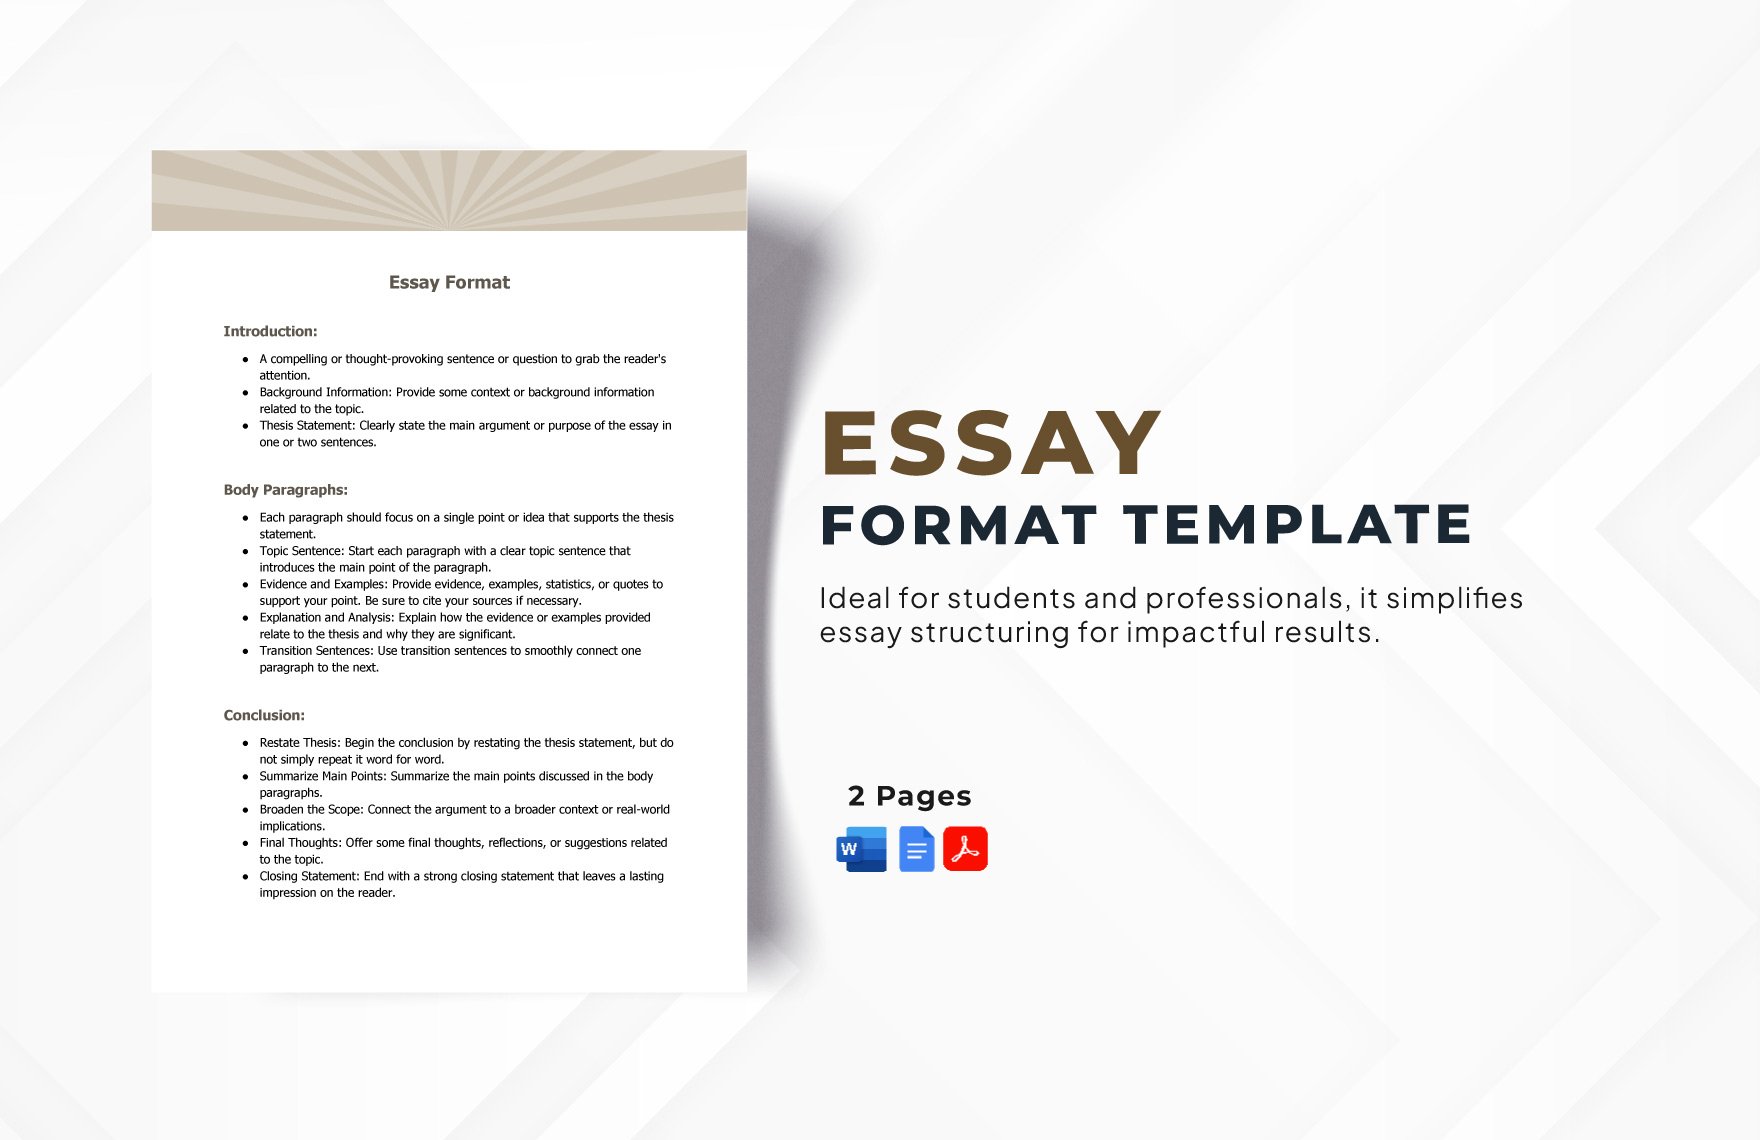 Essay Format Template in Word, Google Docs, PDF